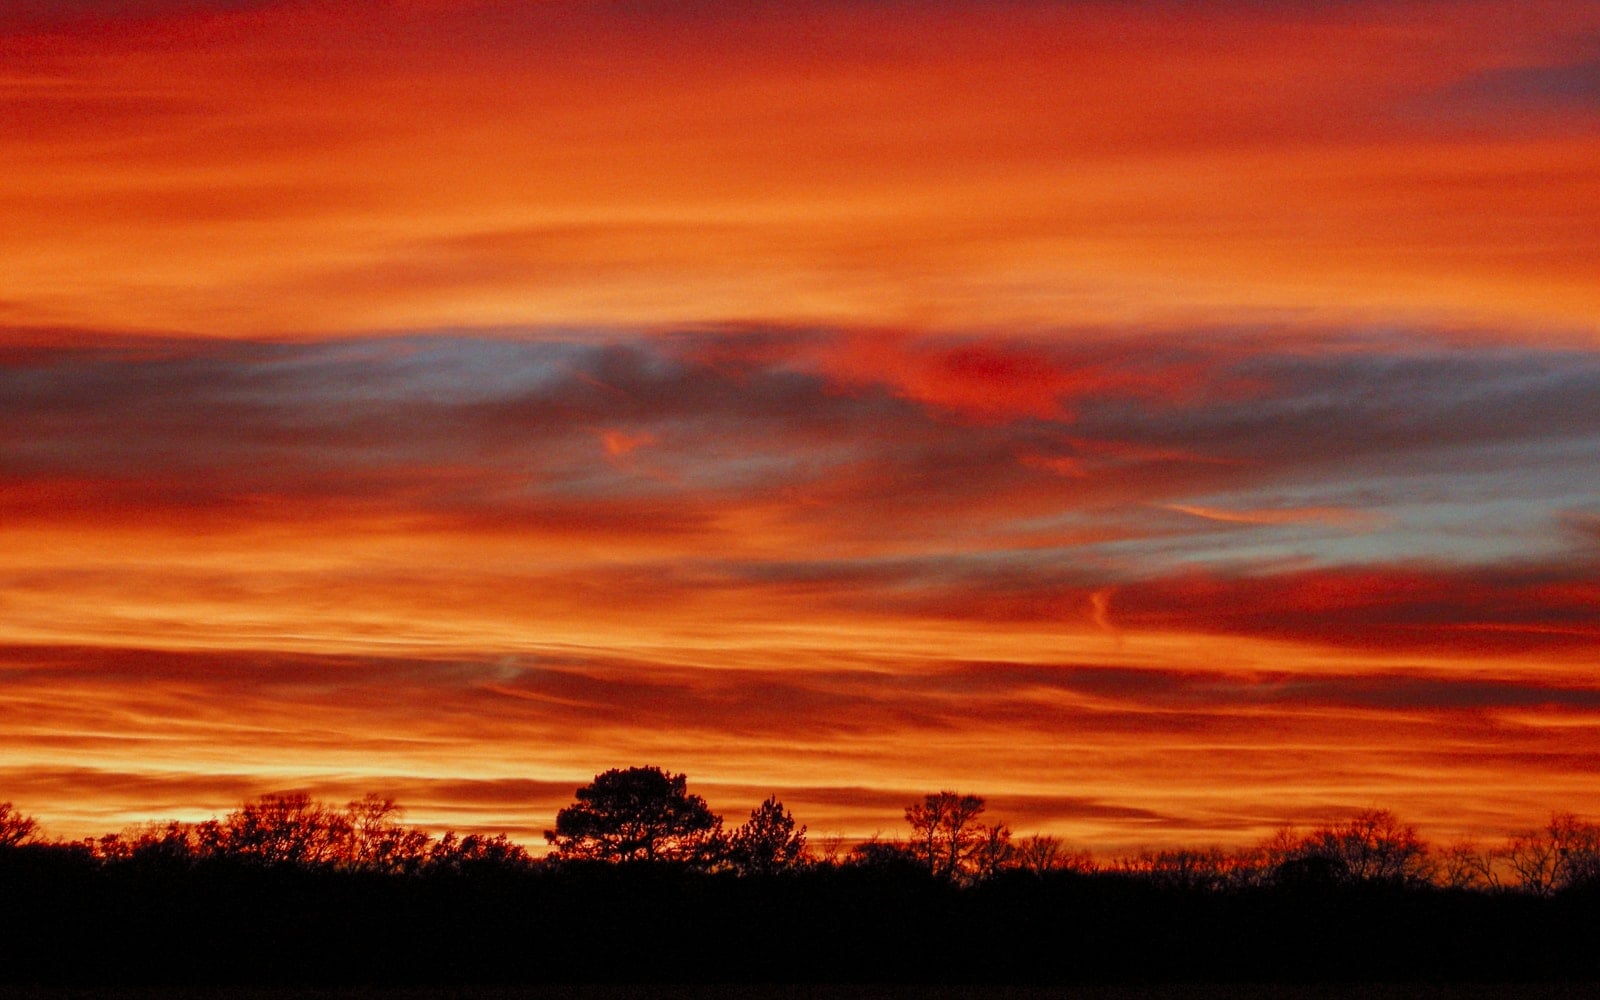 A beautiful fire orange sunset in East Texas